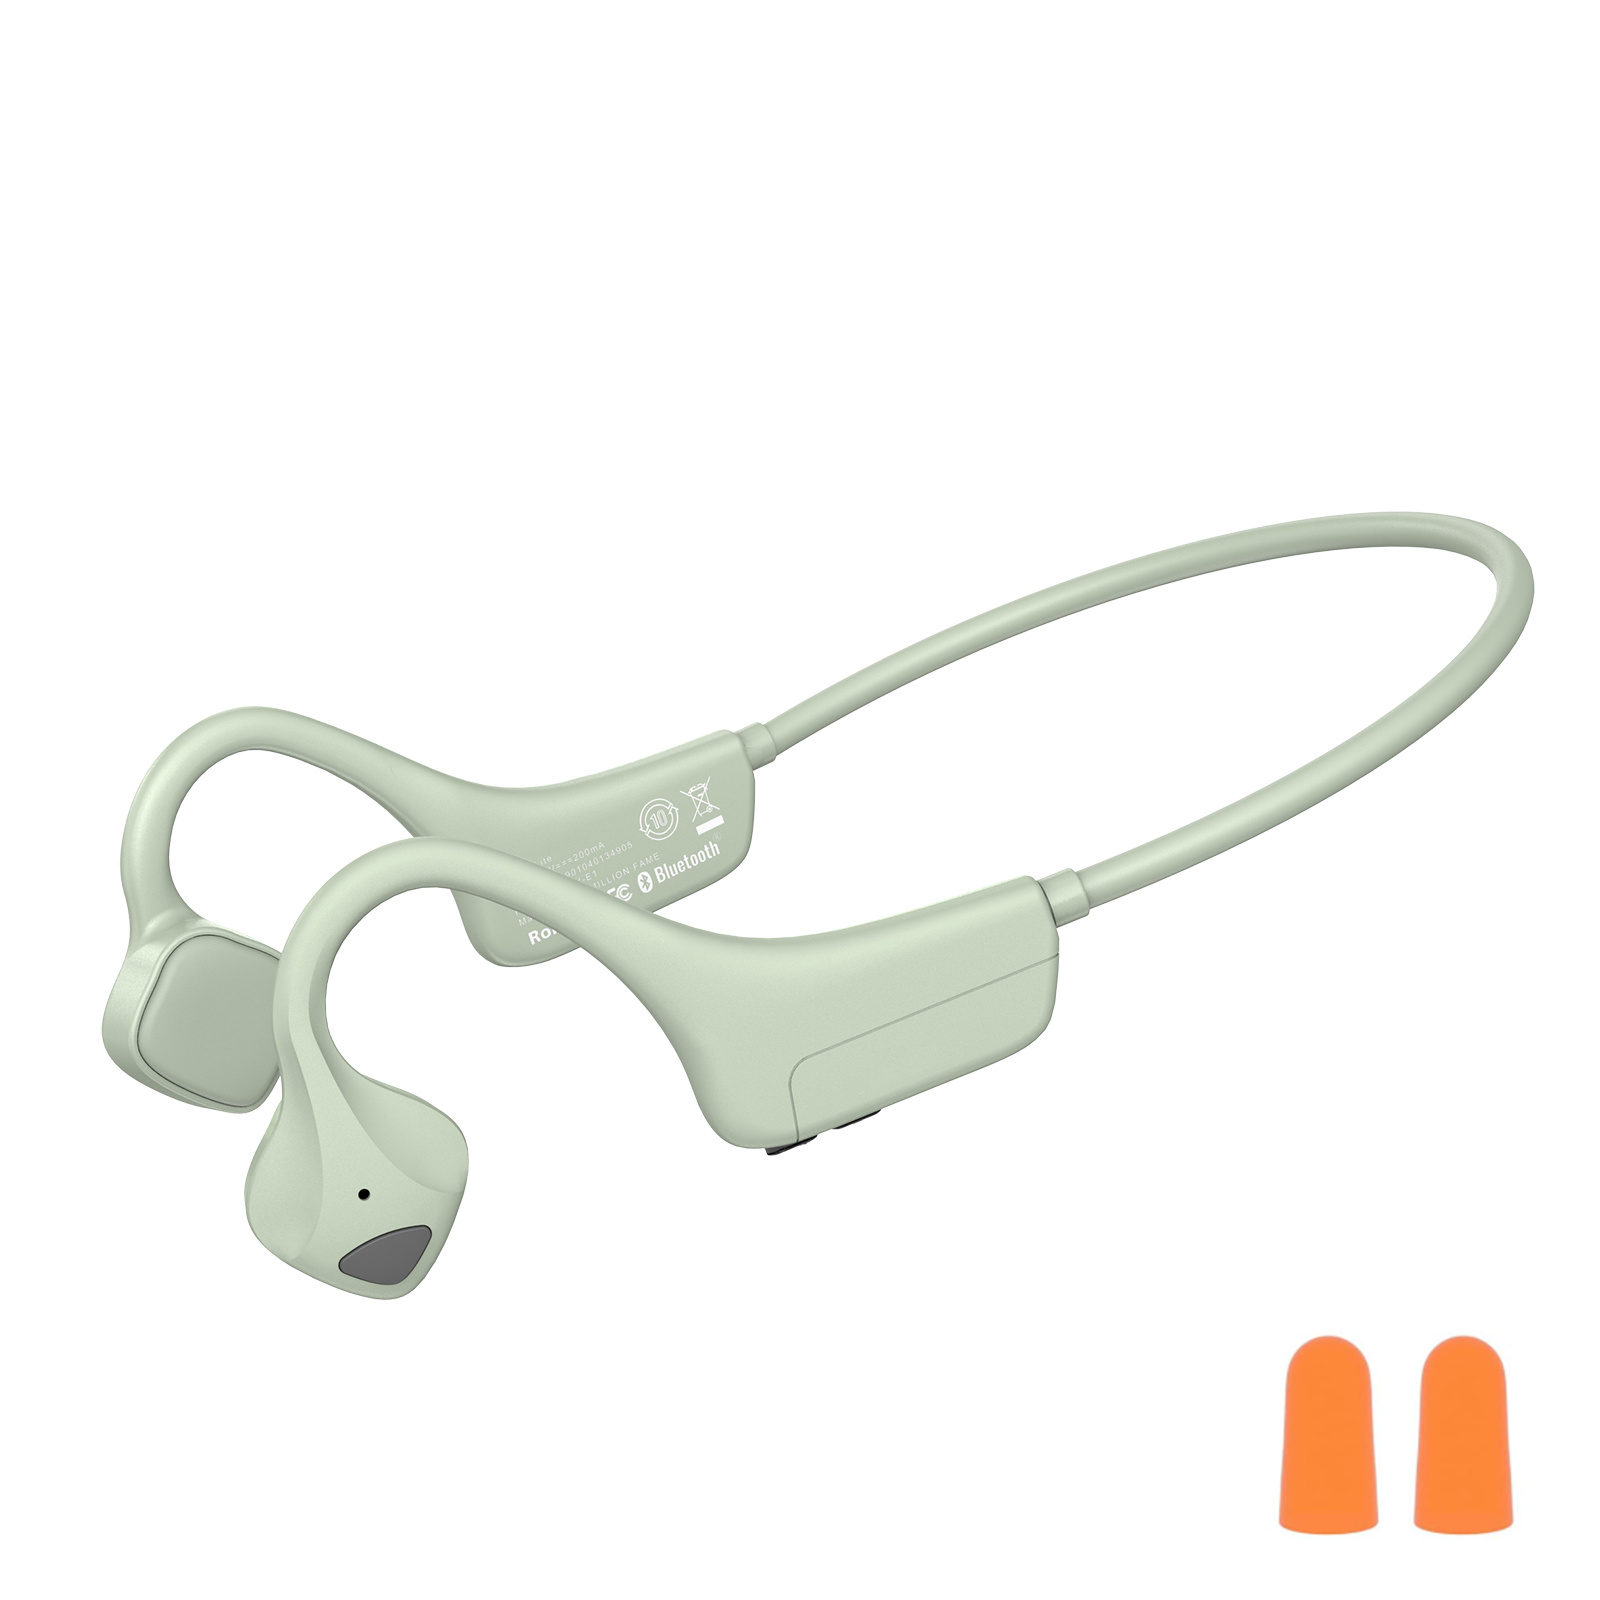 Bone Conduction Headphones Bluetooth 5.0,Wireless Open Ear Headphones with Built-in Mic,Waterproof Earphones,Sweatproof Sports Headset for Running,Cycling,Hiking,Gym,Climbing & Driving(Grey)